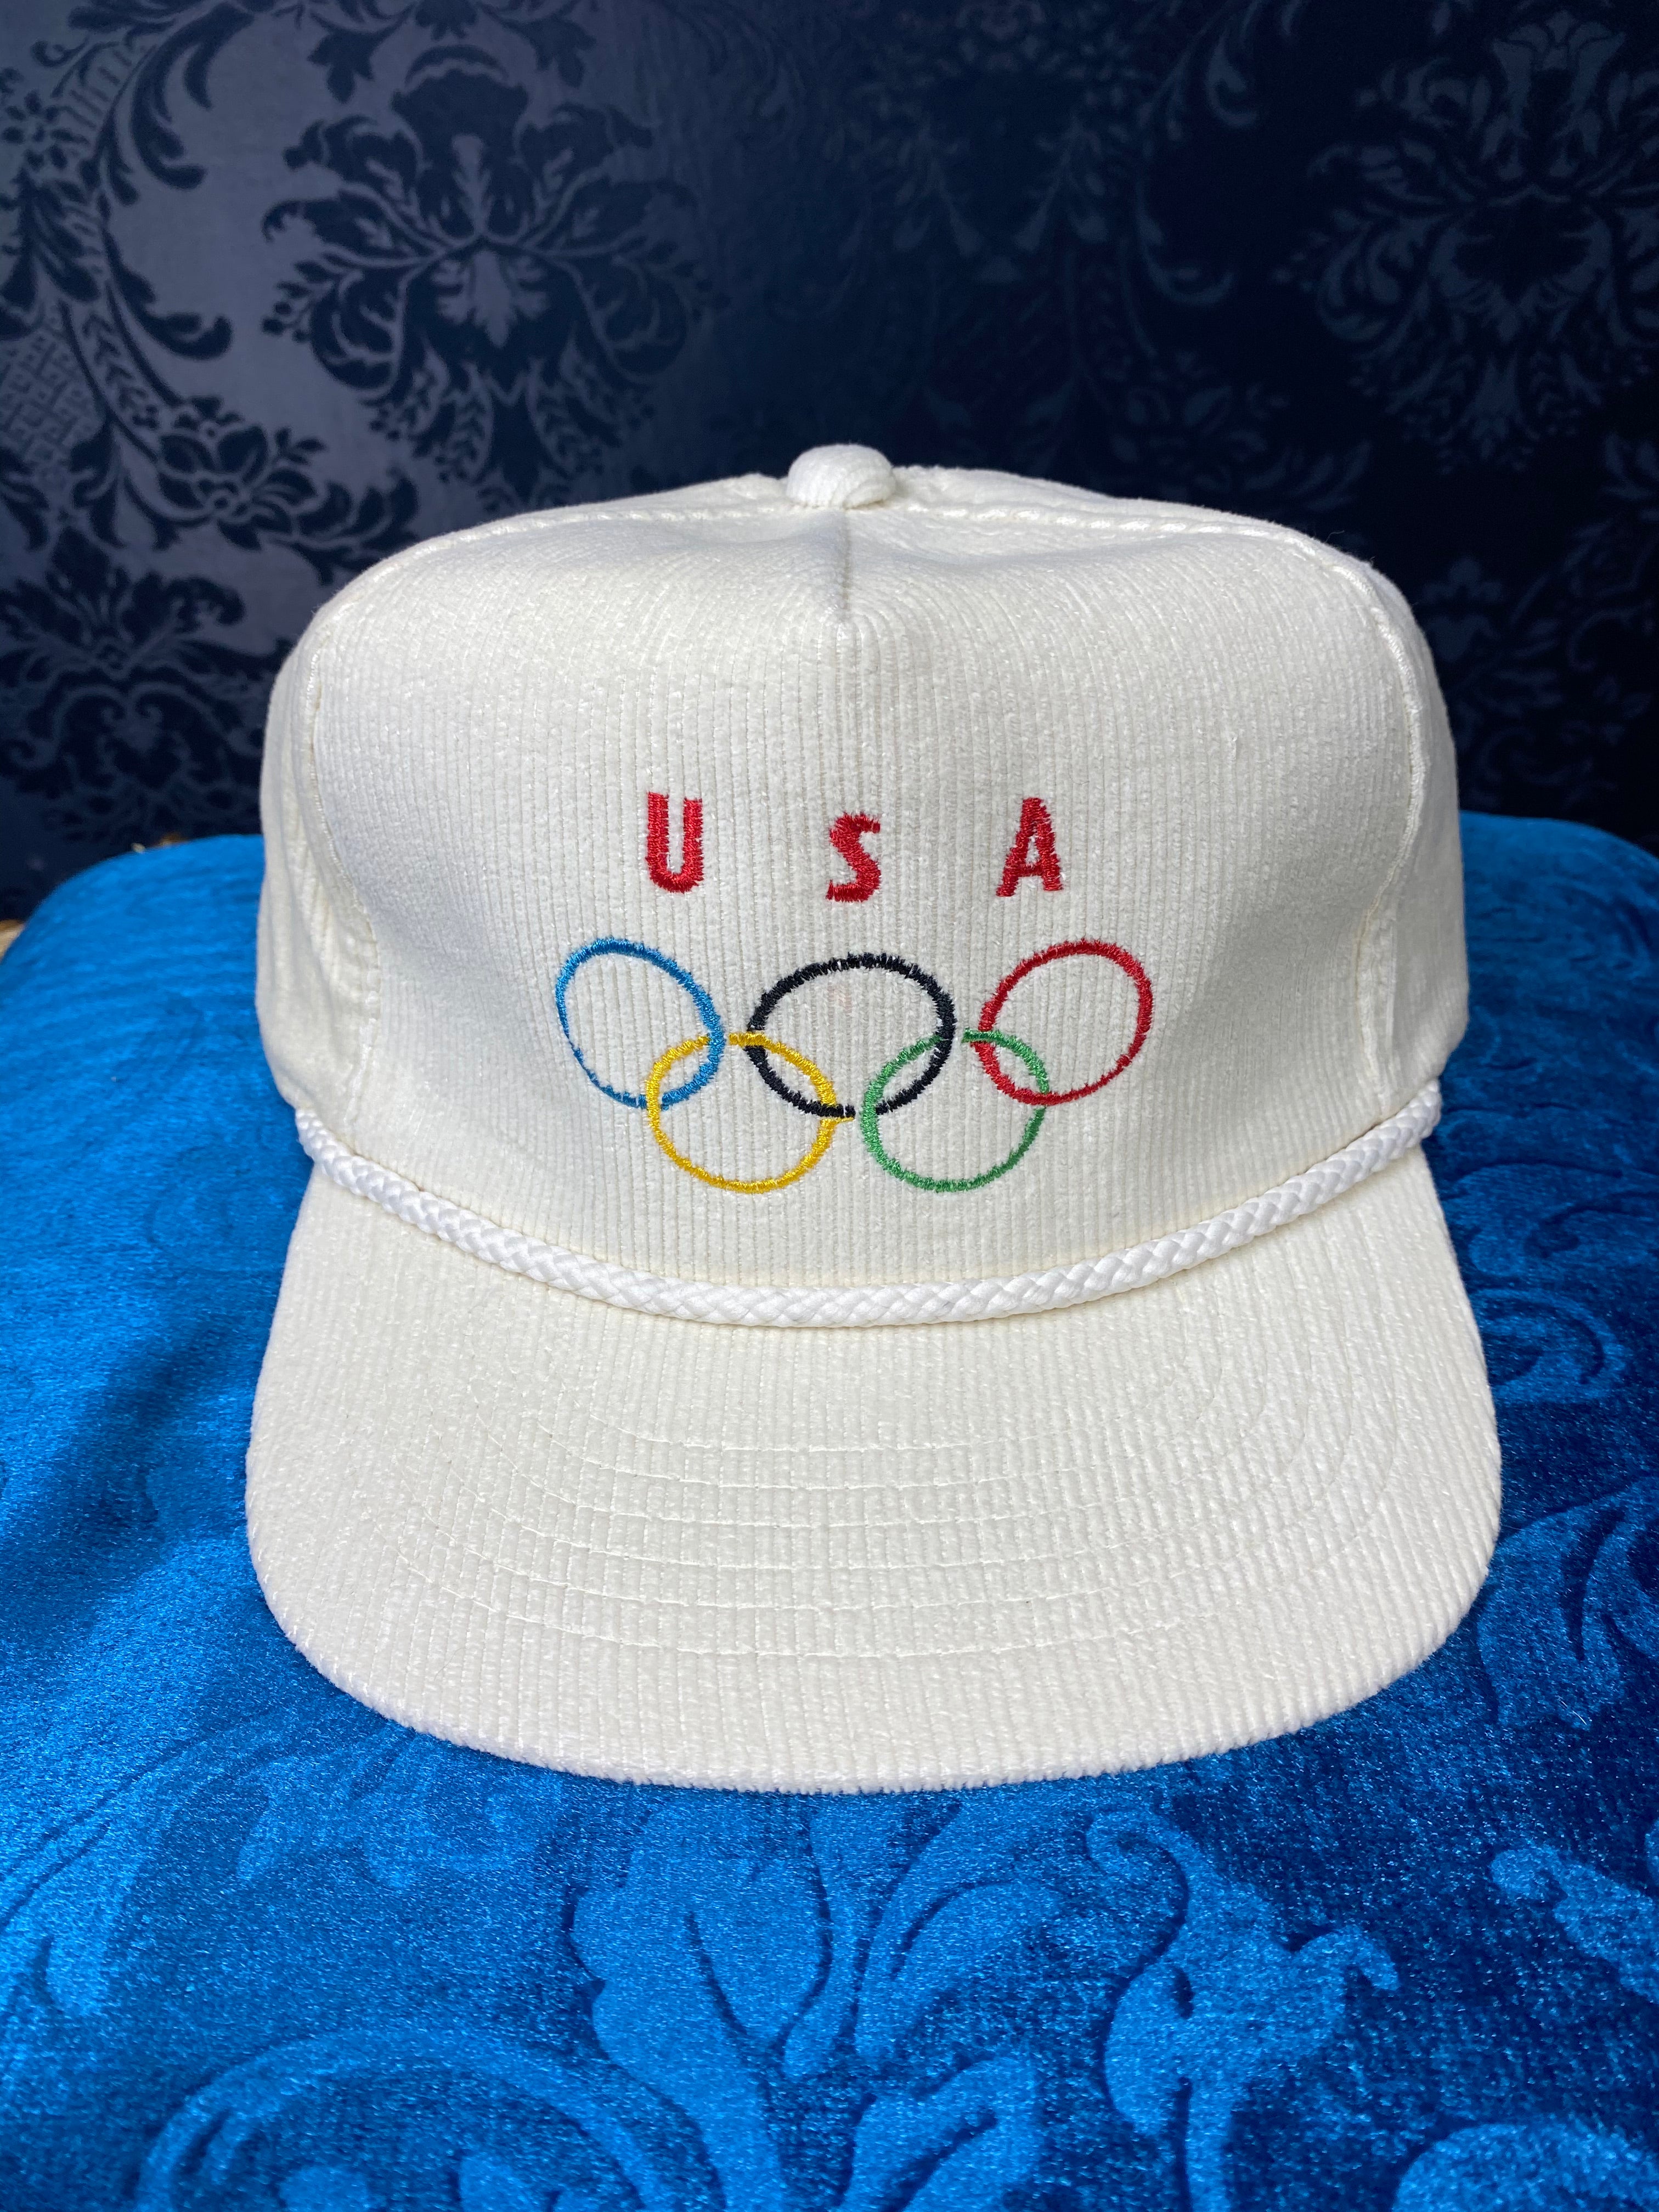 Vintage Rare USA Olympic Adjustable Strap